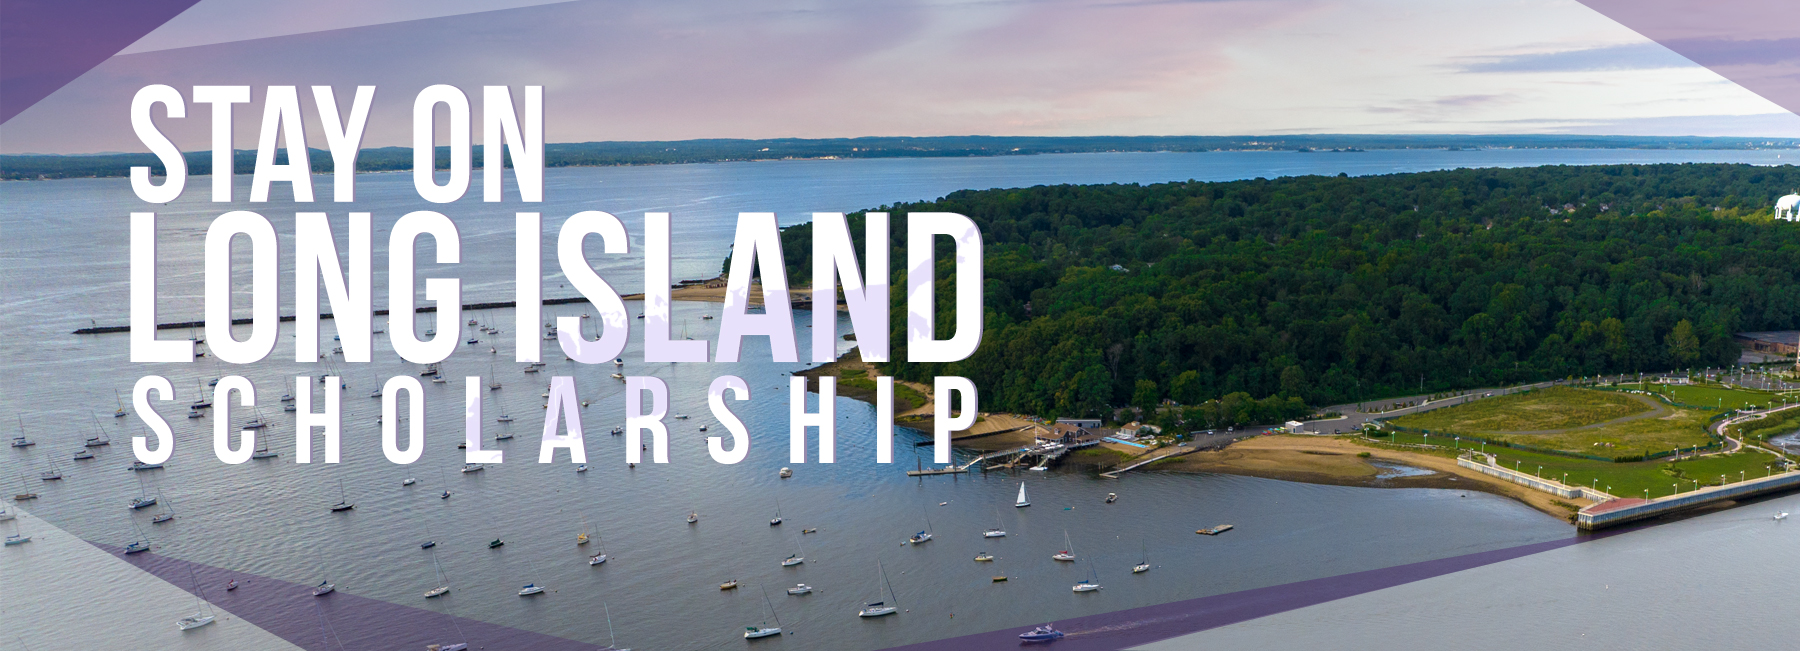 Stay on Long Island Scholarship